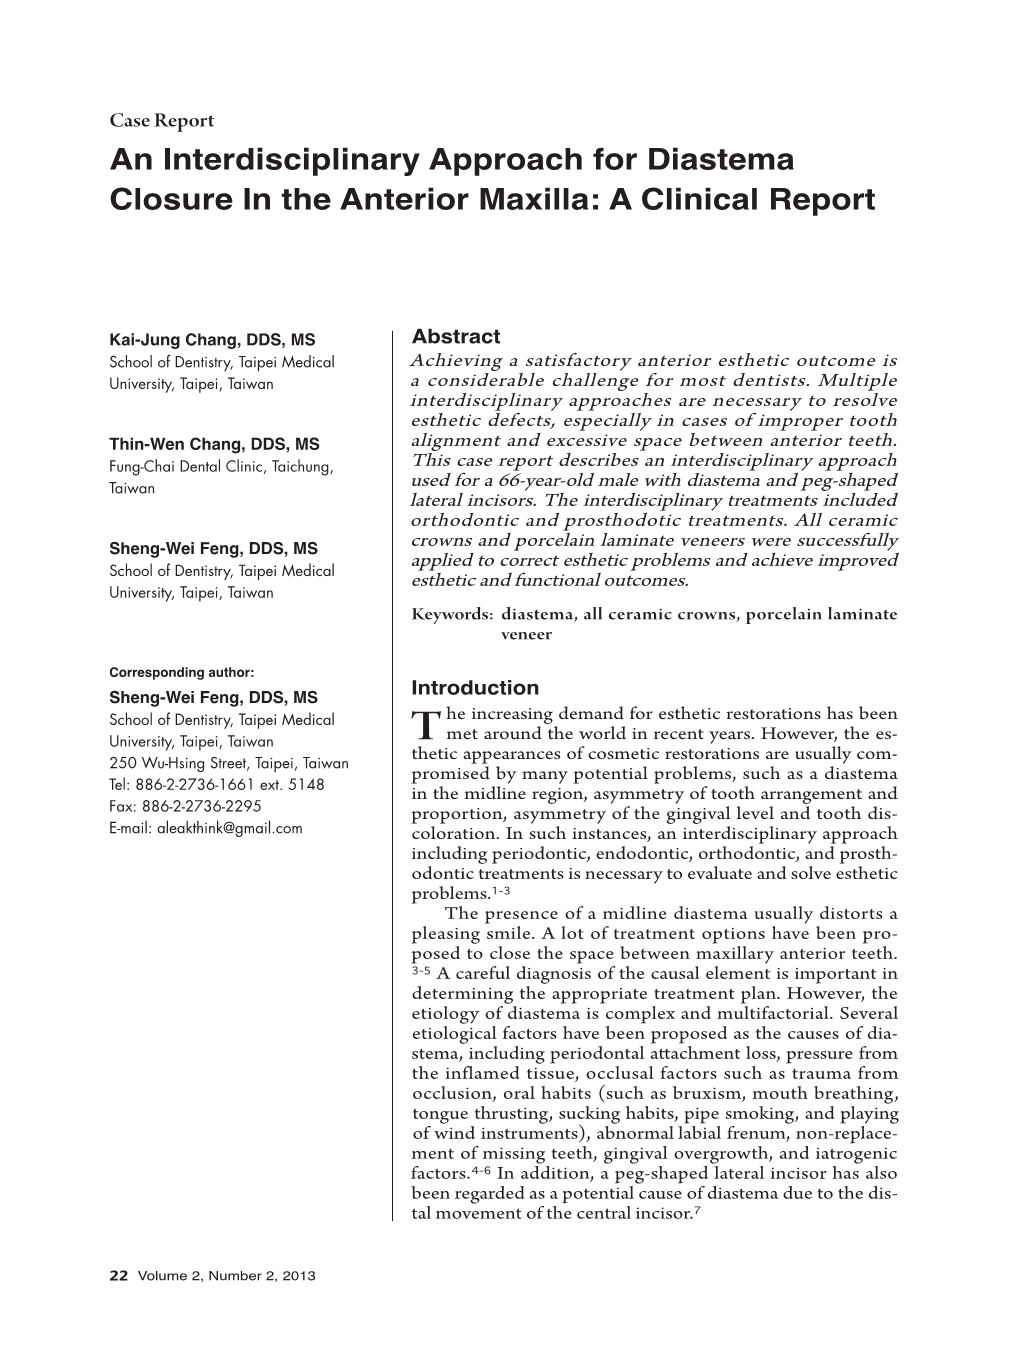 An Interdisciplinary Approach for Diastema Closure in the Anterior Maxilla: a Clinical Report